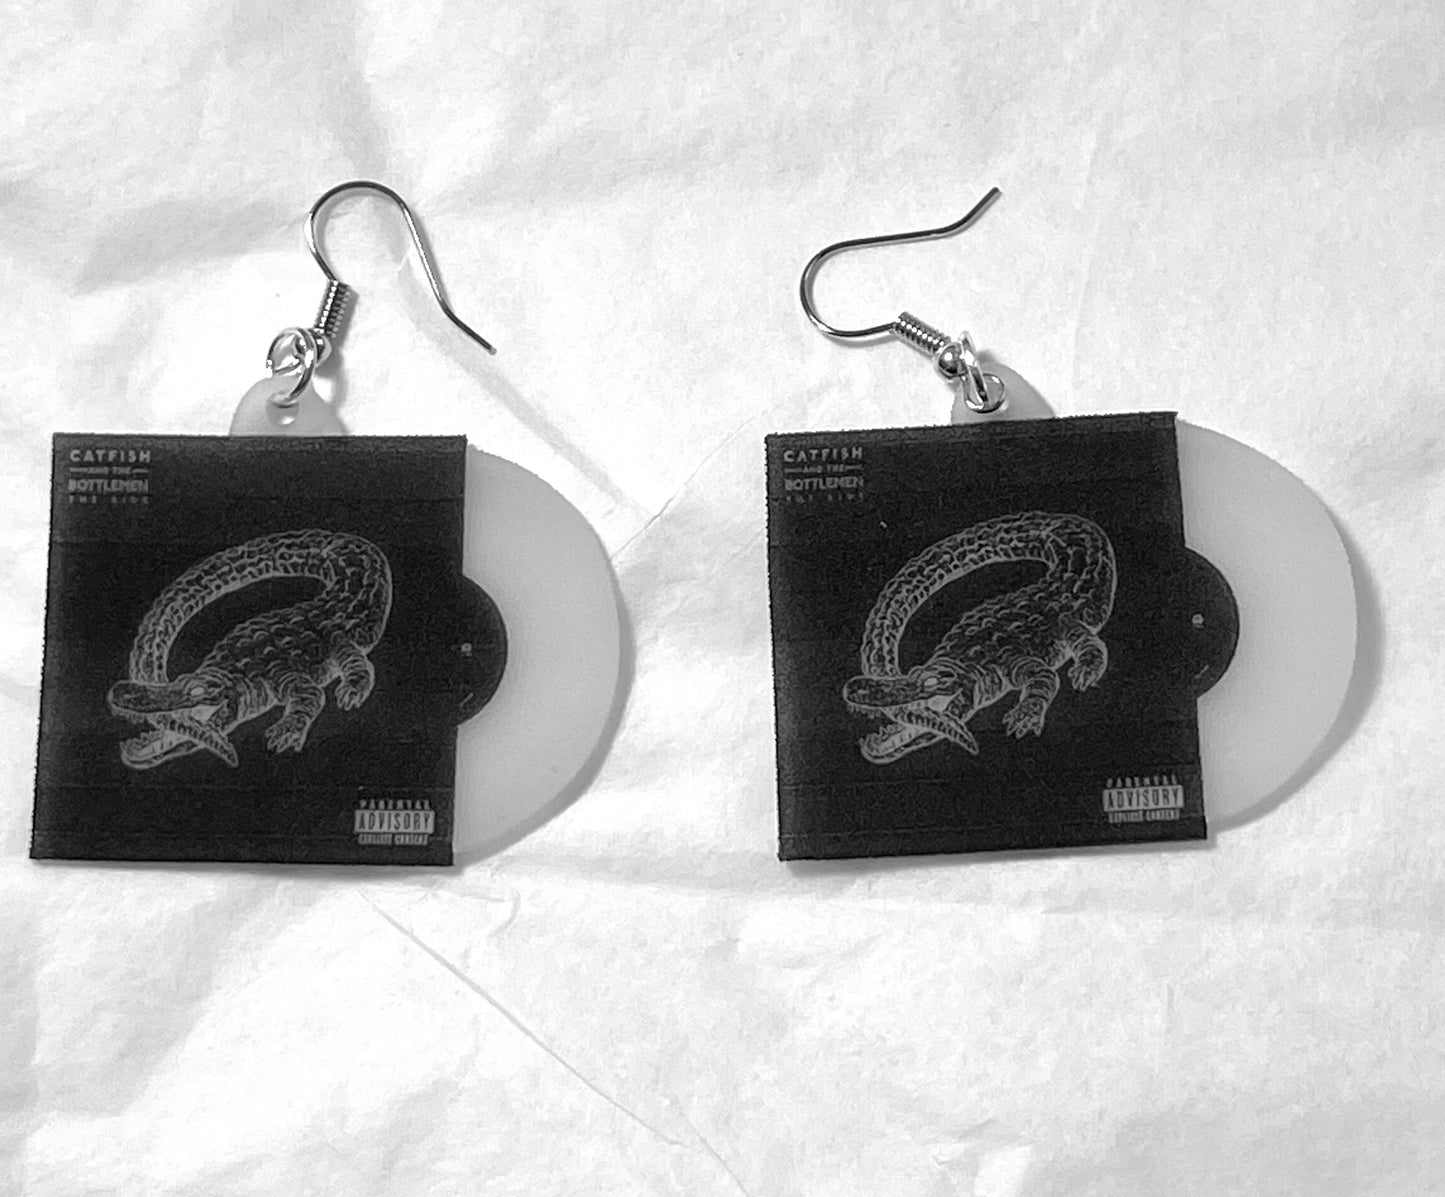 Catfish and the Bottlmen Collection of Vinyl Albums Handmade Earrings!